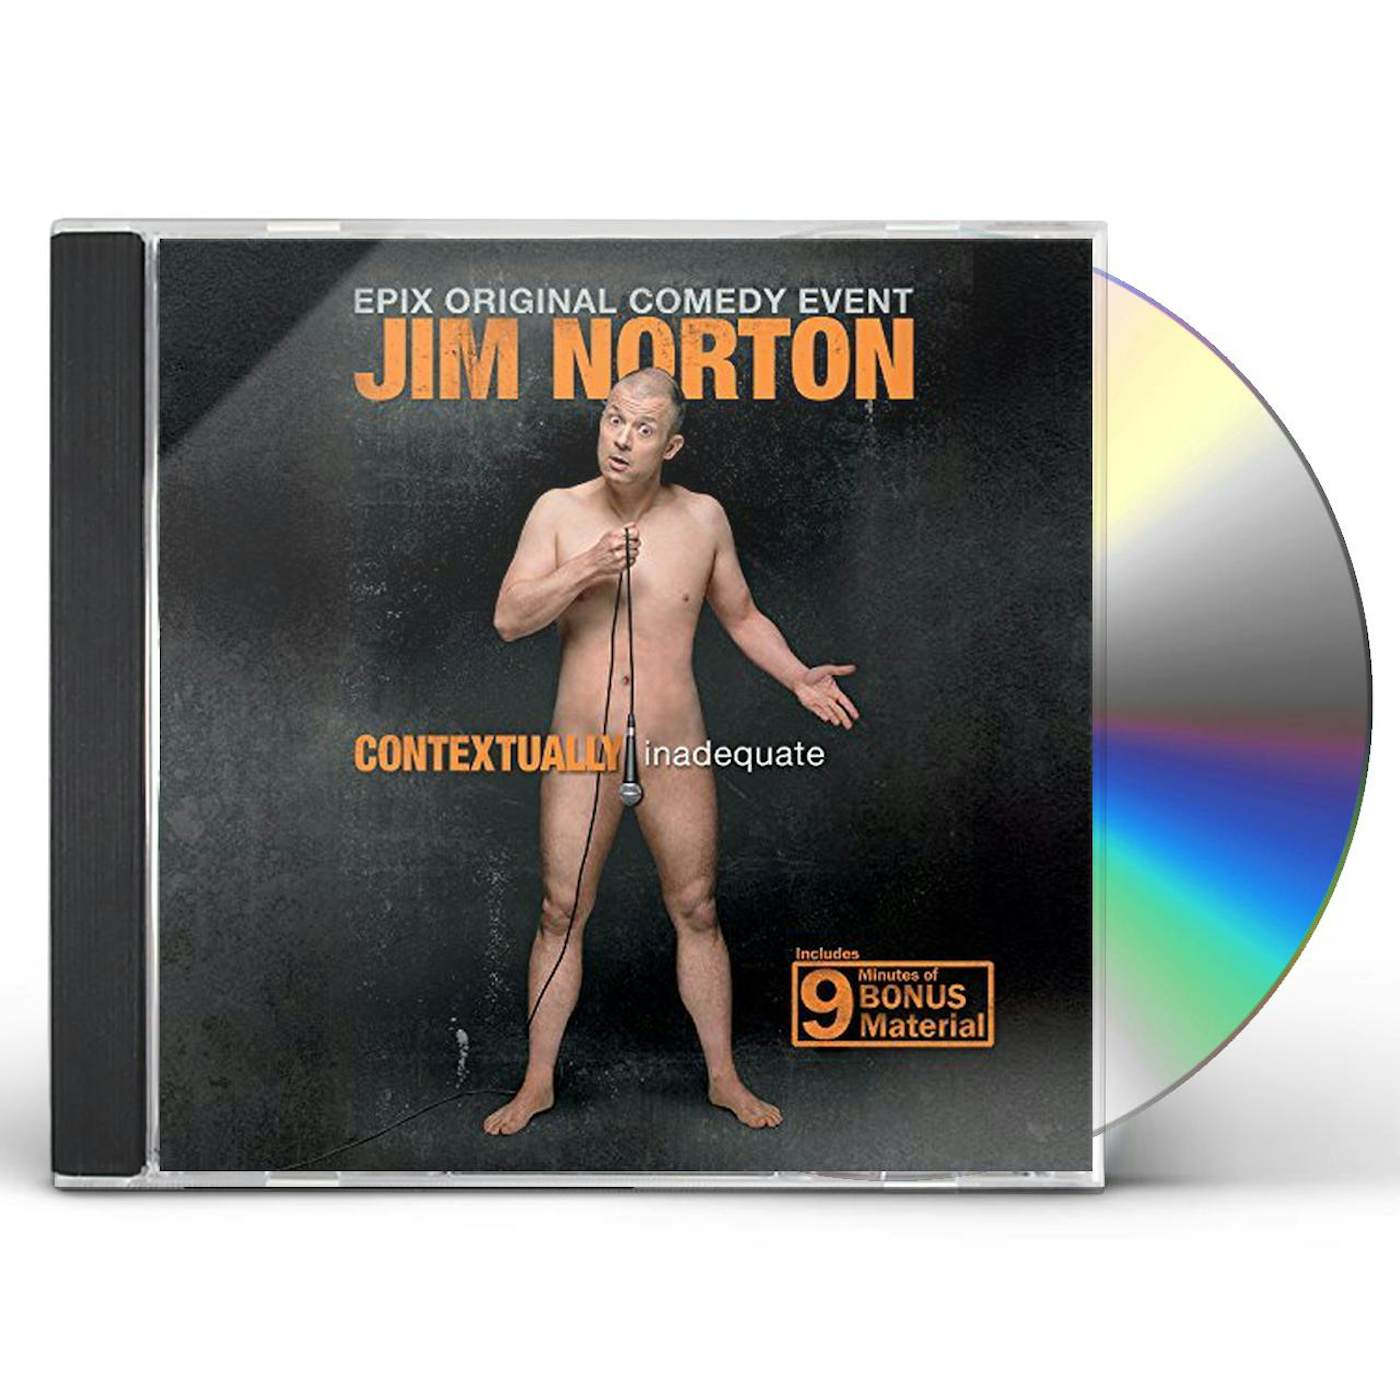 Jim Norton CONTEXTUALLY INADEQUATE CD